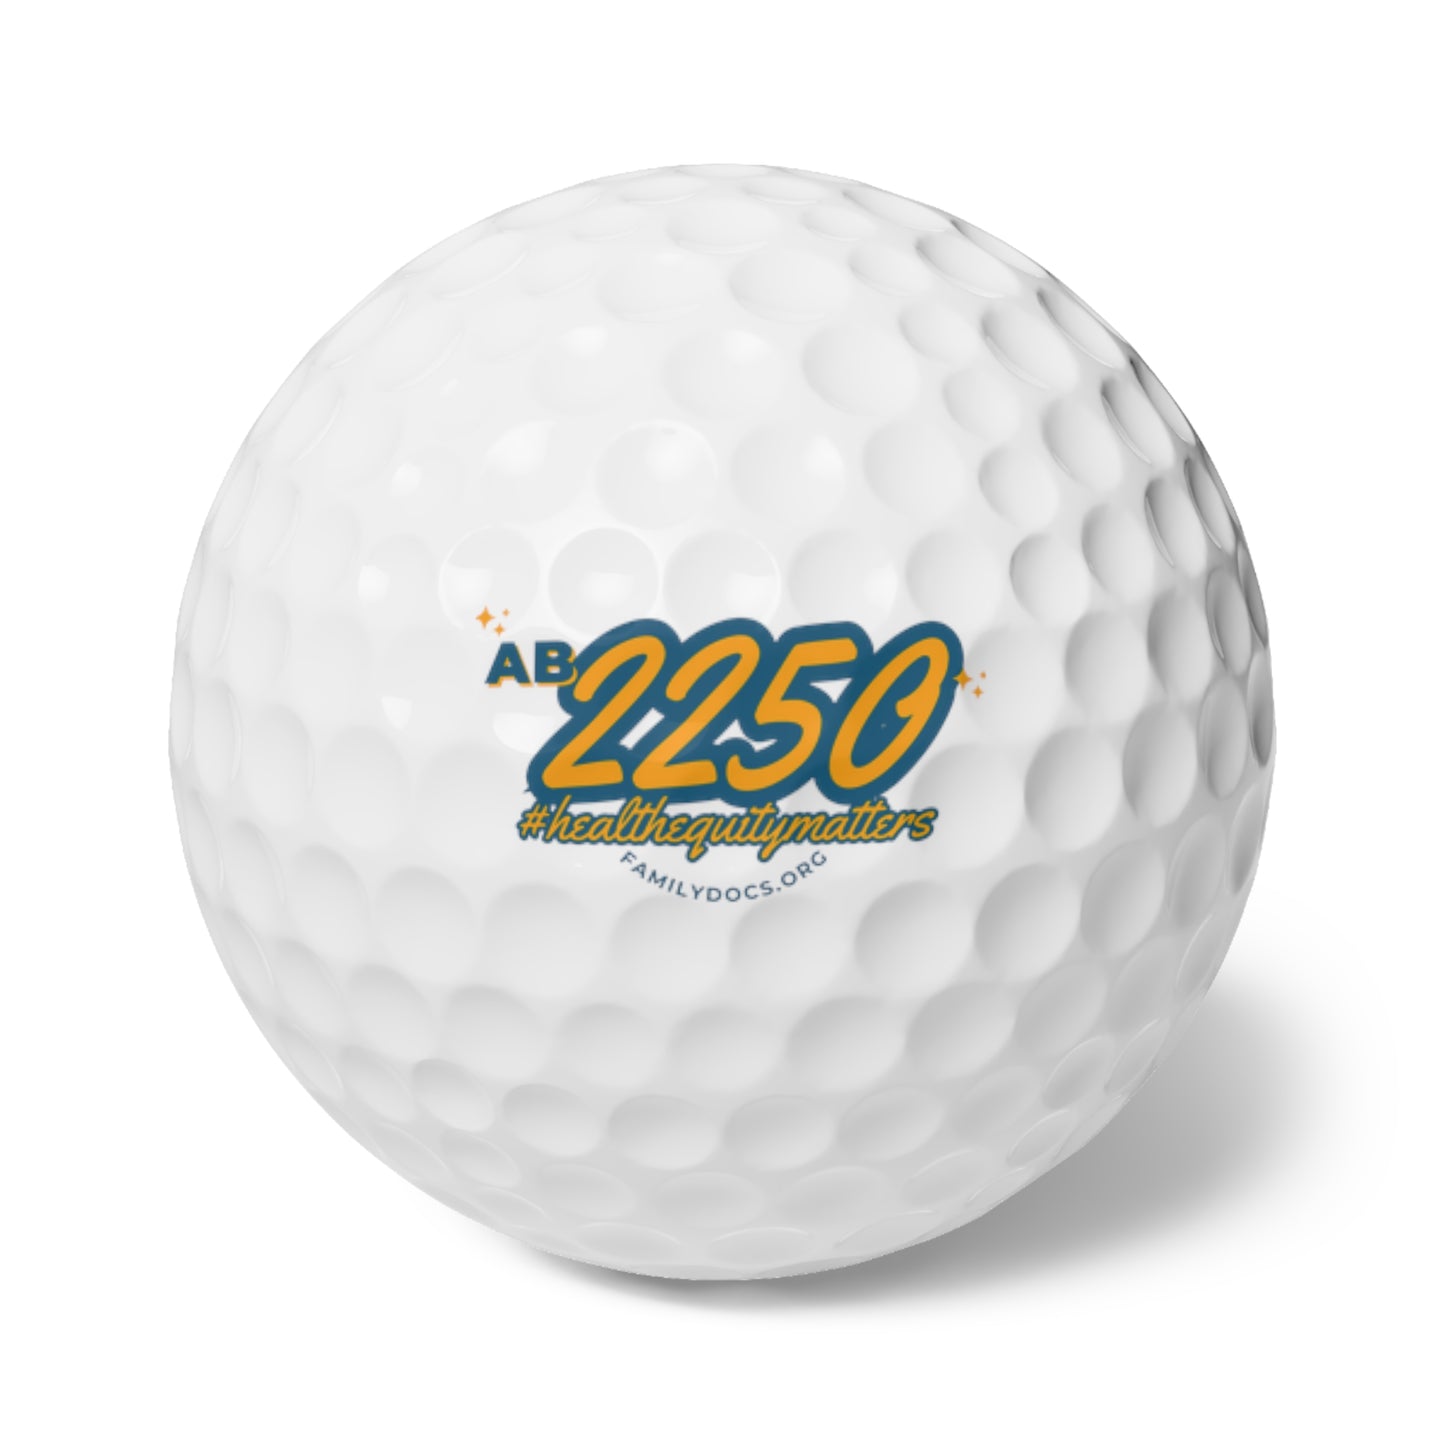 AB2250 Golf Balls, 6pcs